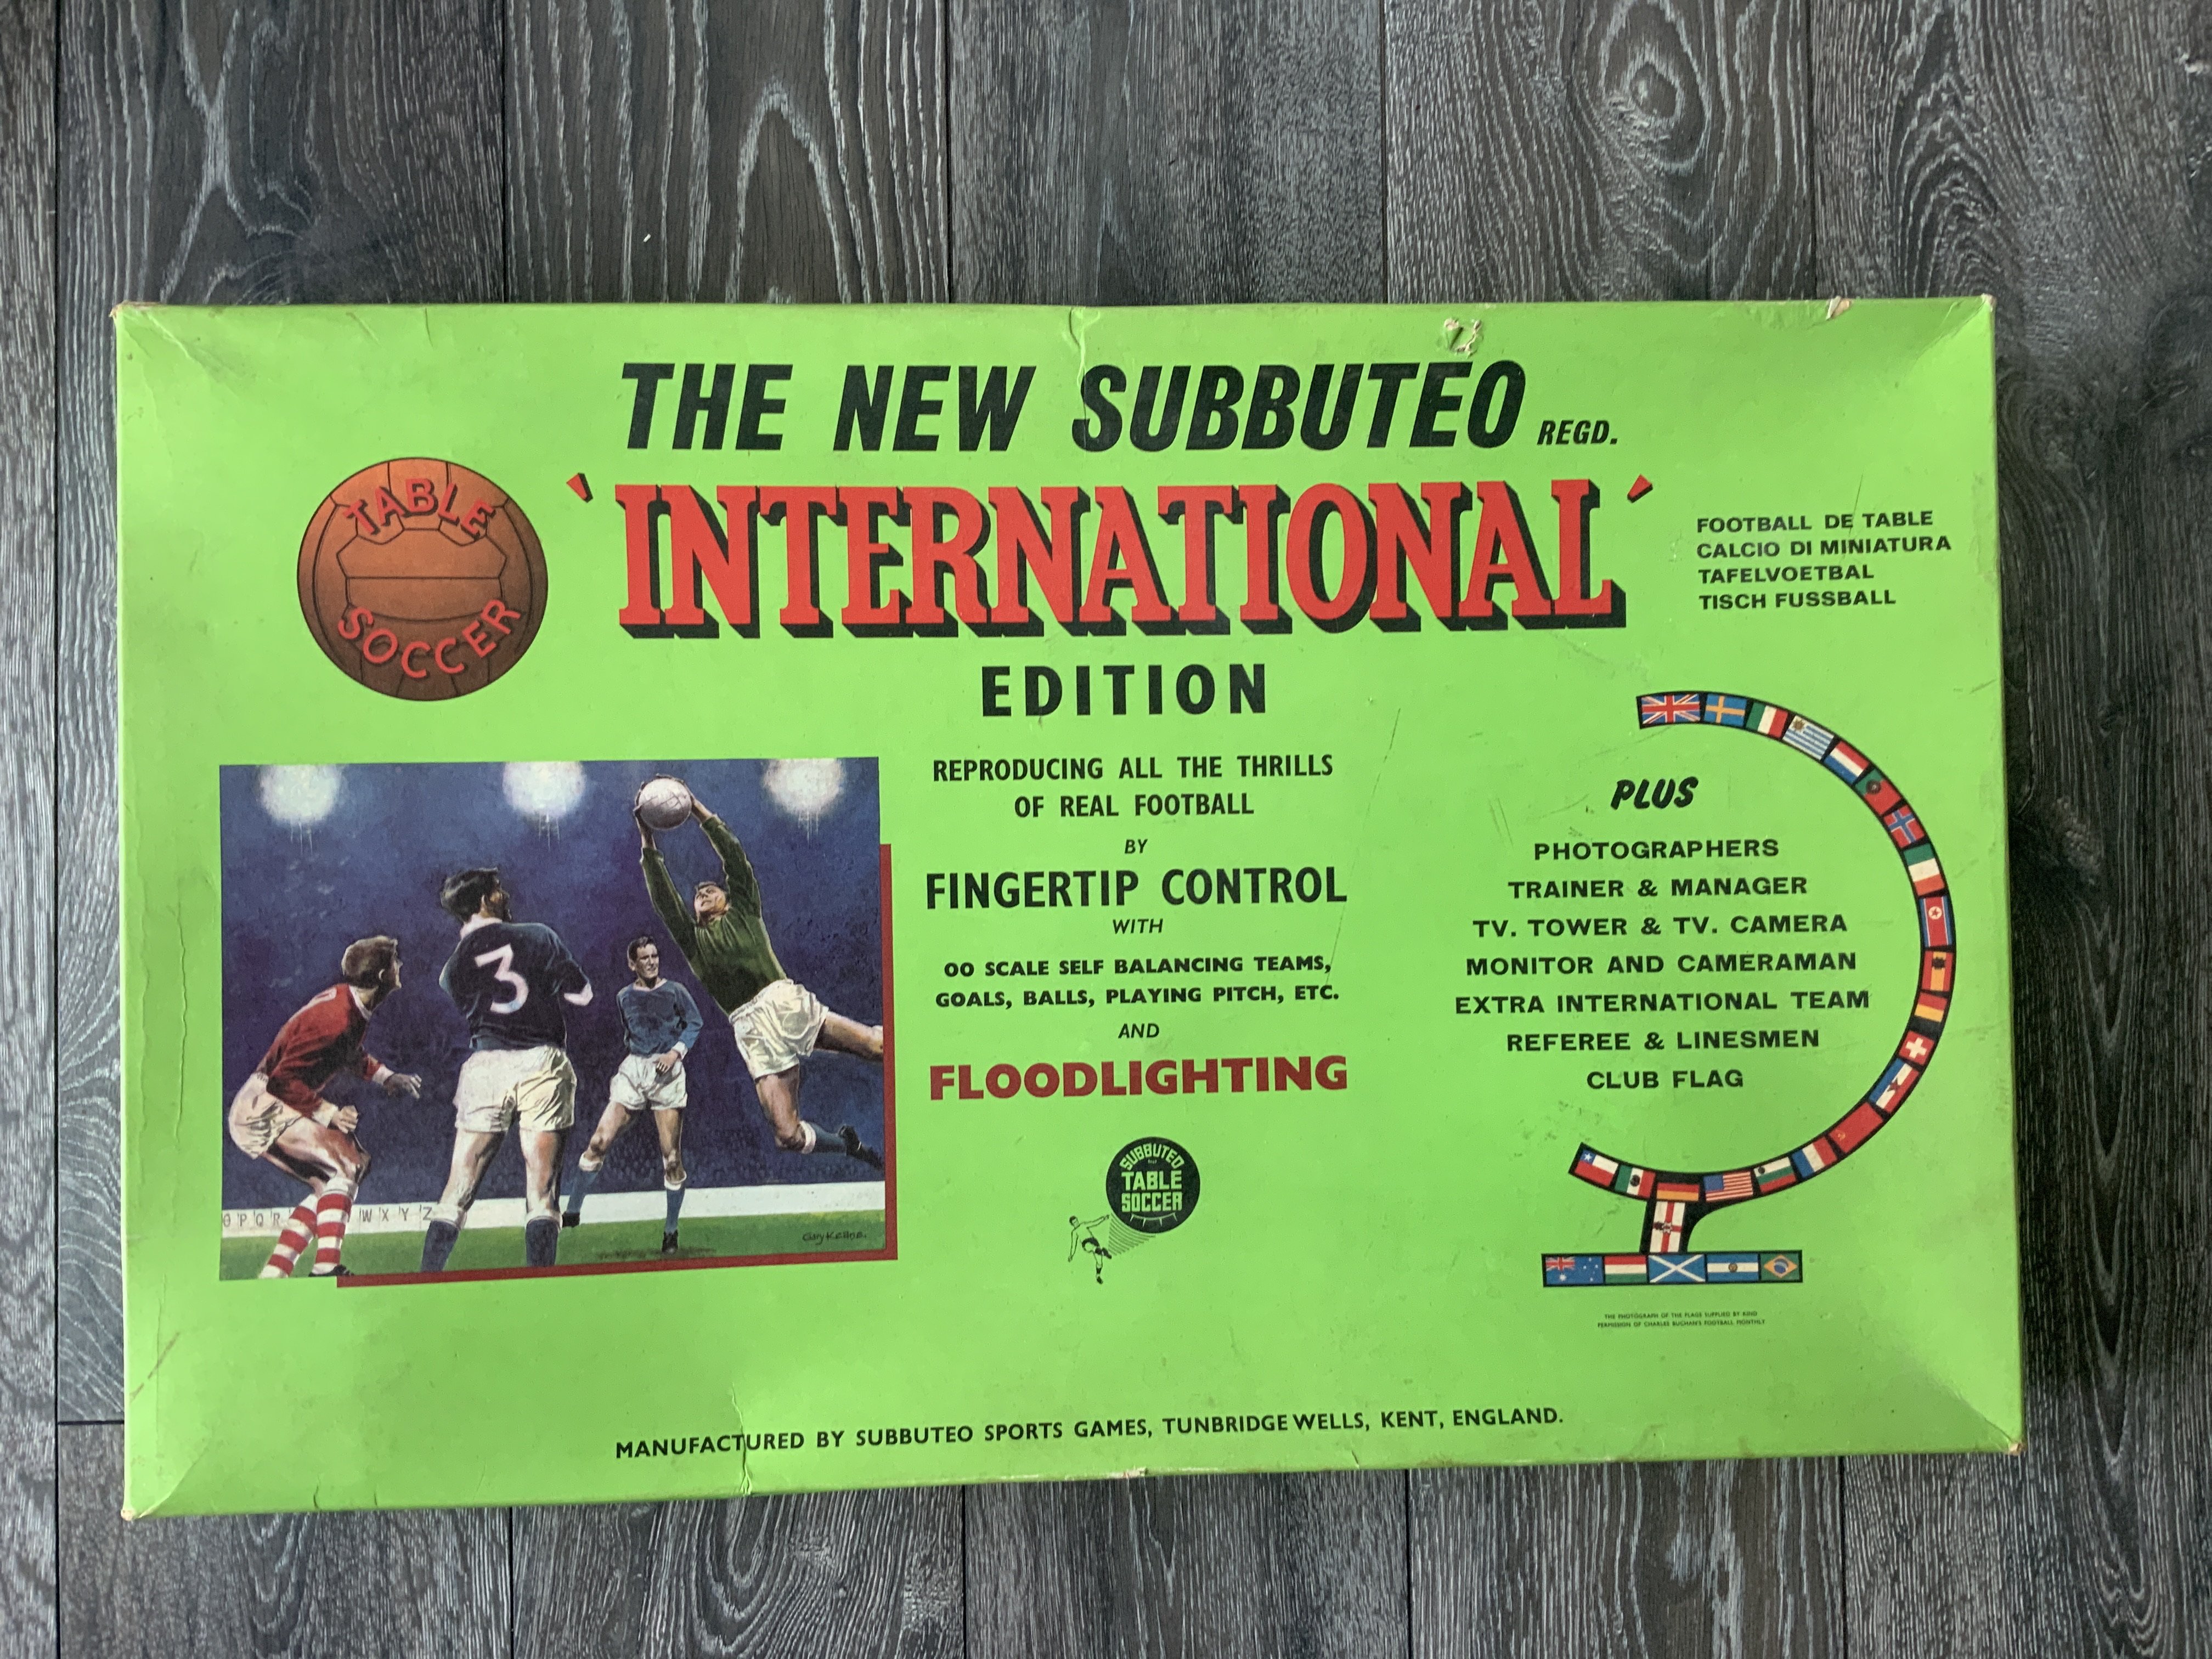 Subbuteo International Boxed Football Game: Looks